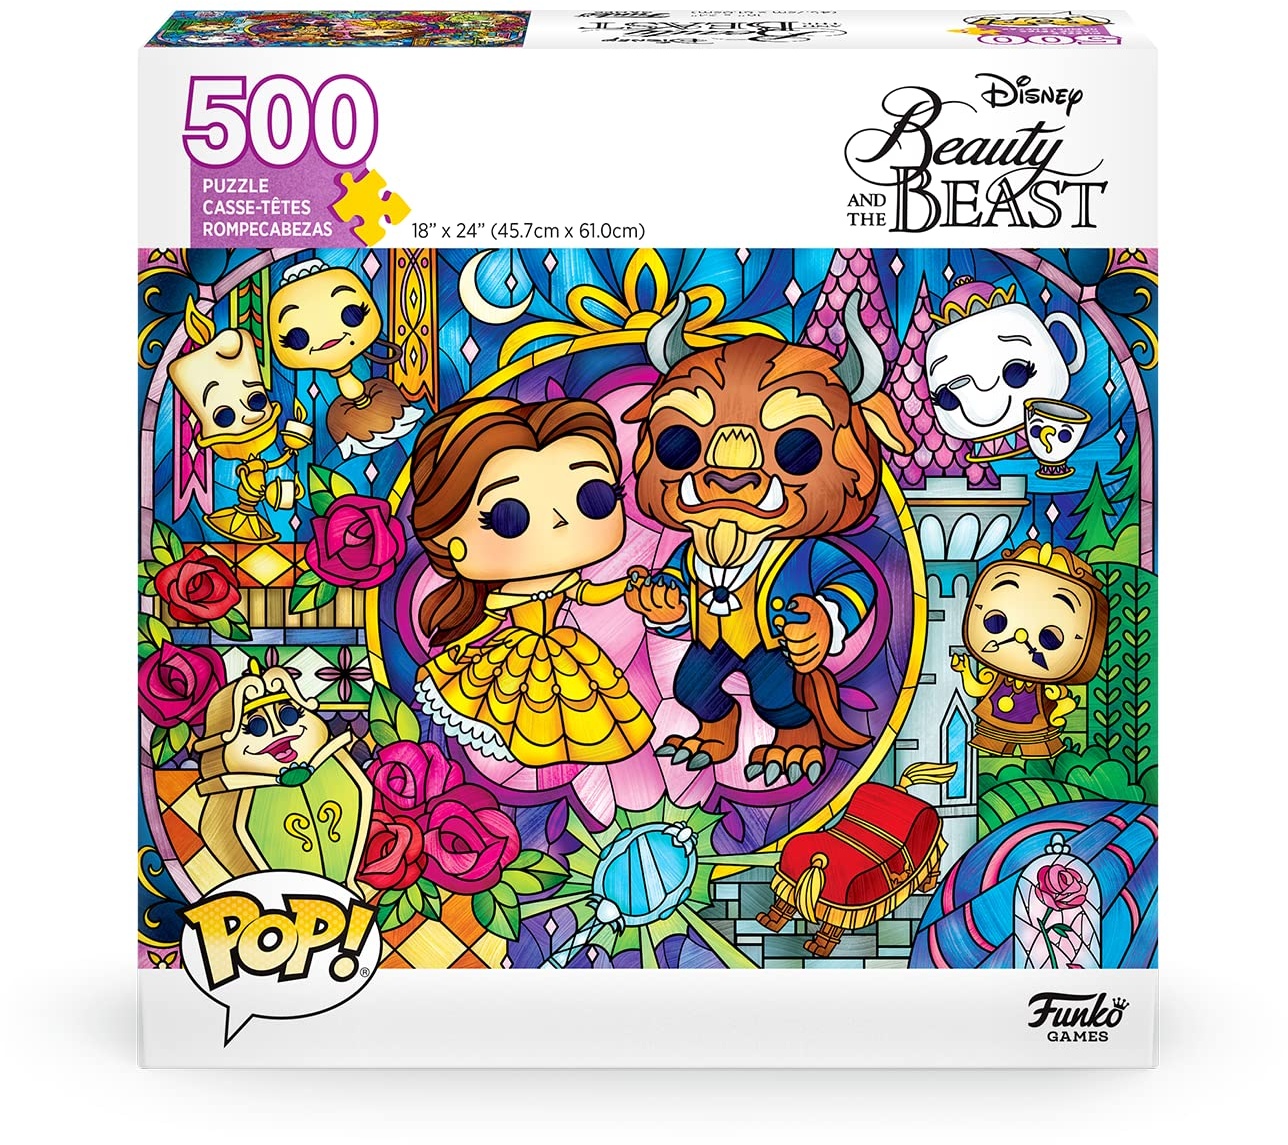 Funko POP! Puzzle - Disney Beauty and The Beast - Funko - Jigsaw - 500 Pieces - 45.7cm x 61cm - English/French/Spanish Language